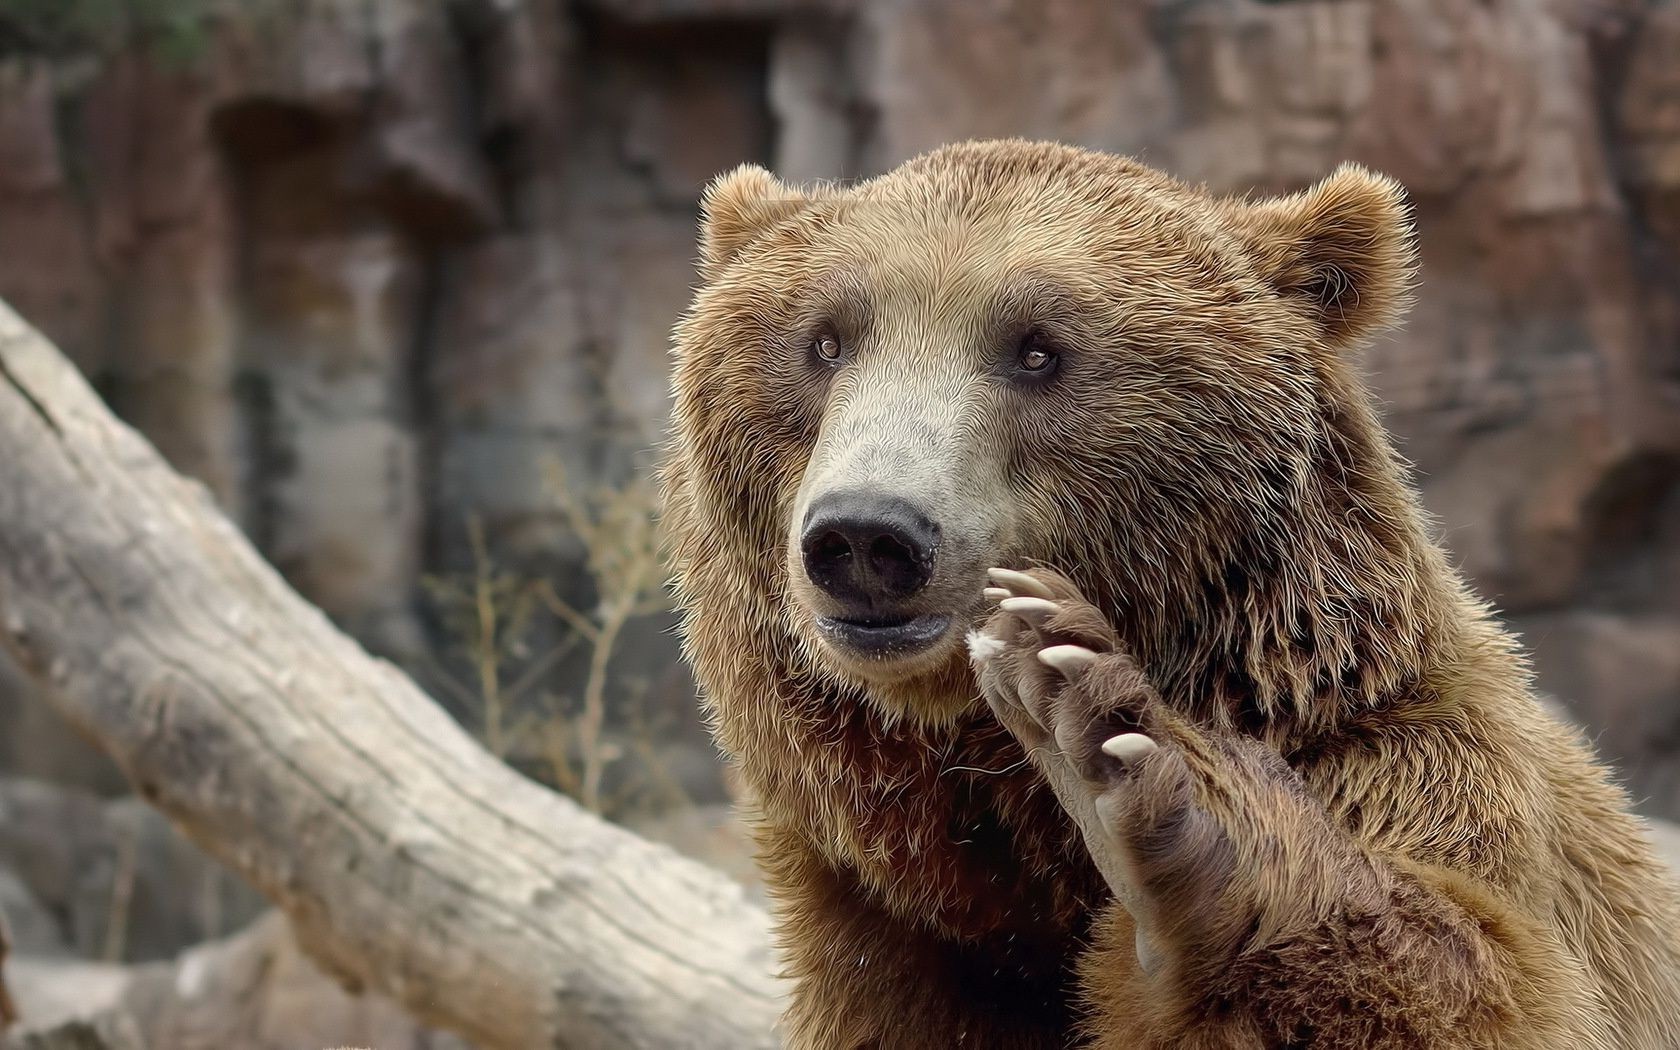 bears mammal wildlife nature fur animal wild outdoors zoo predator wood